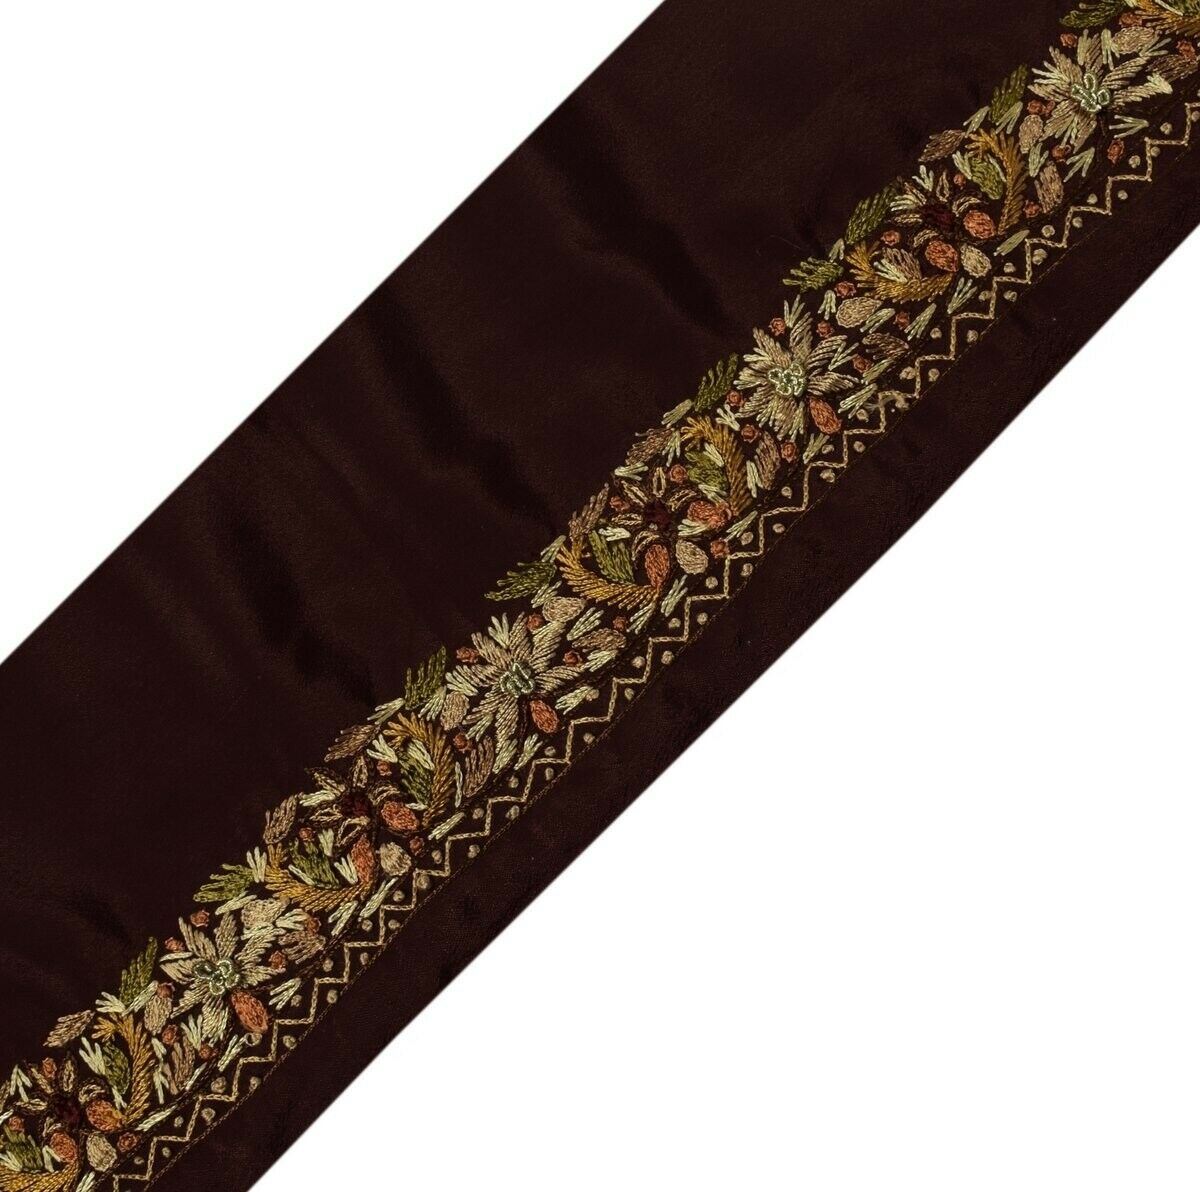 Vintage Sari Border Indian Craft Trim Hand Embroidered Garnet Sewing Ribbon Lace